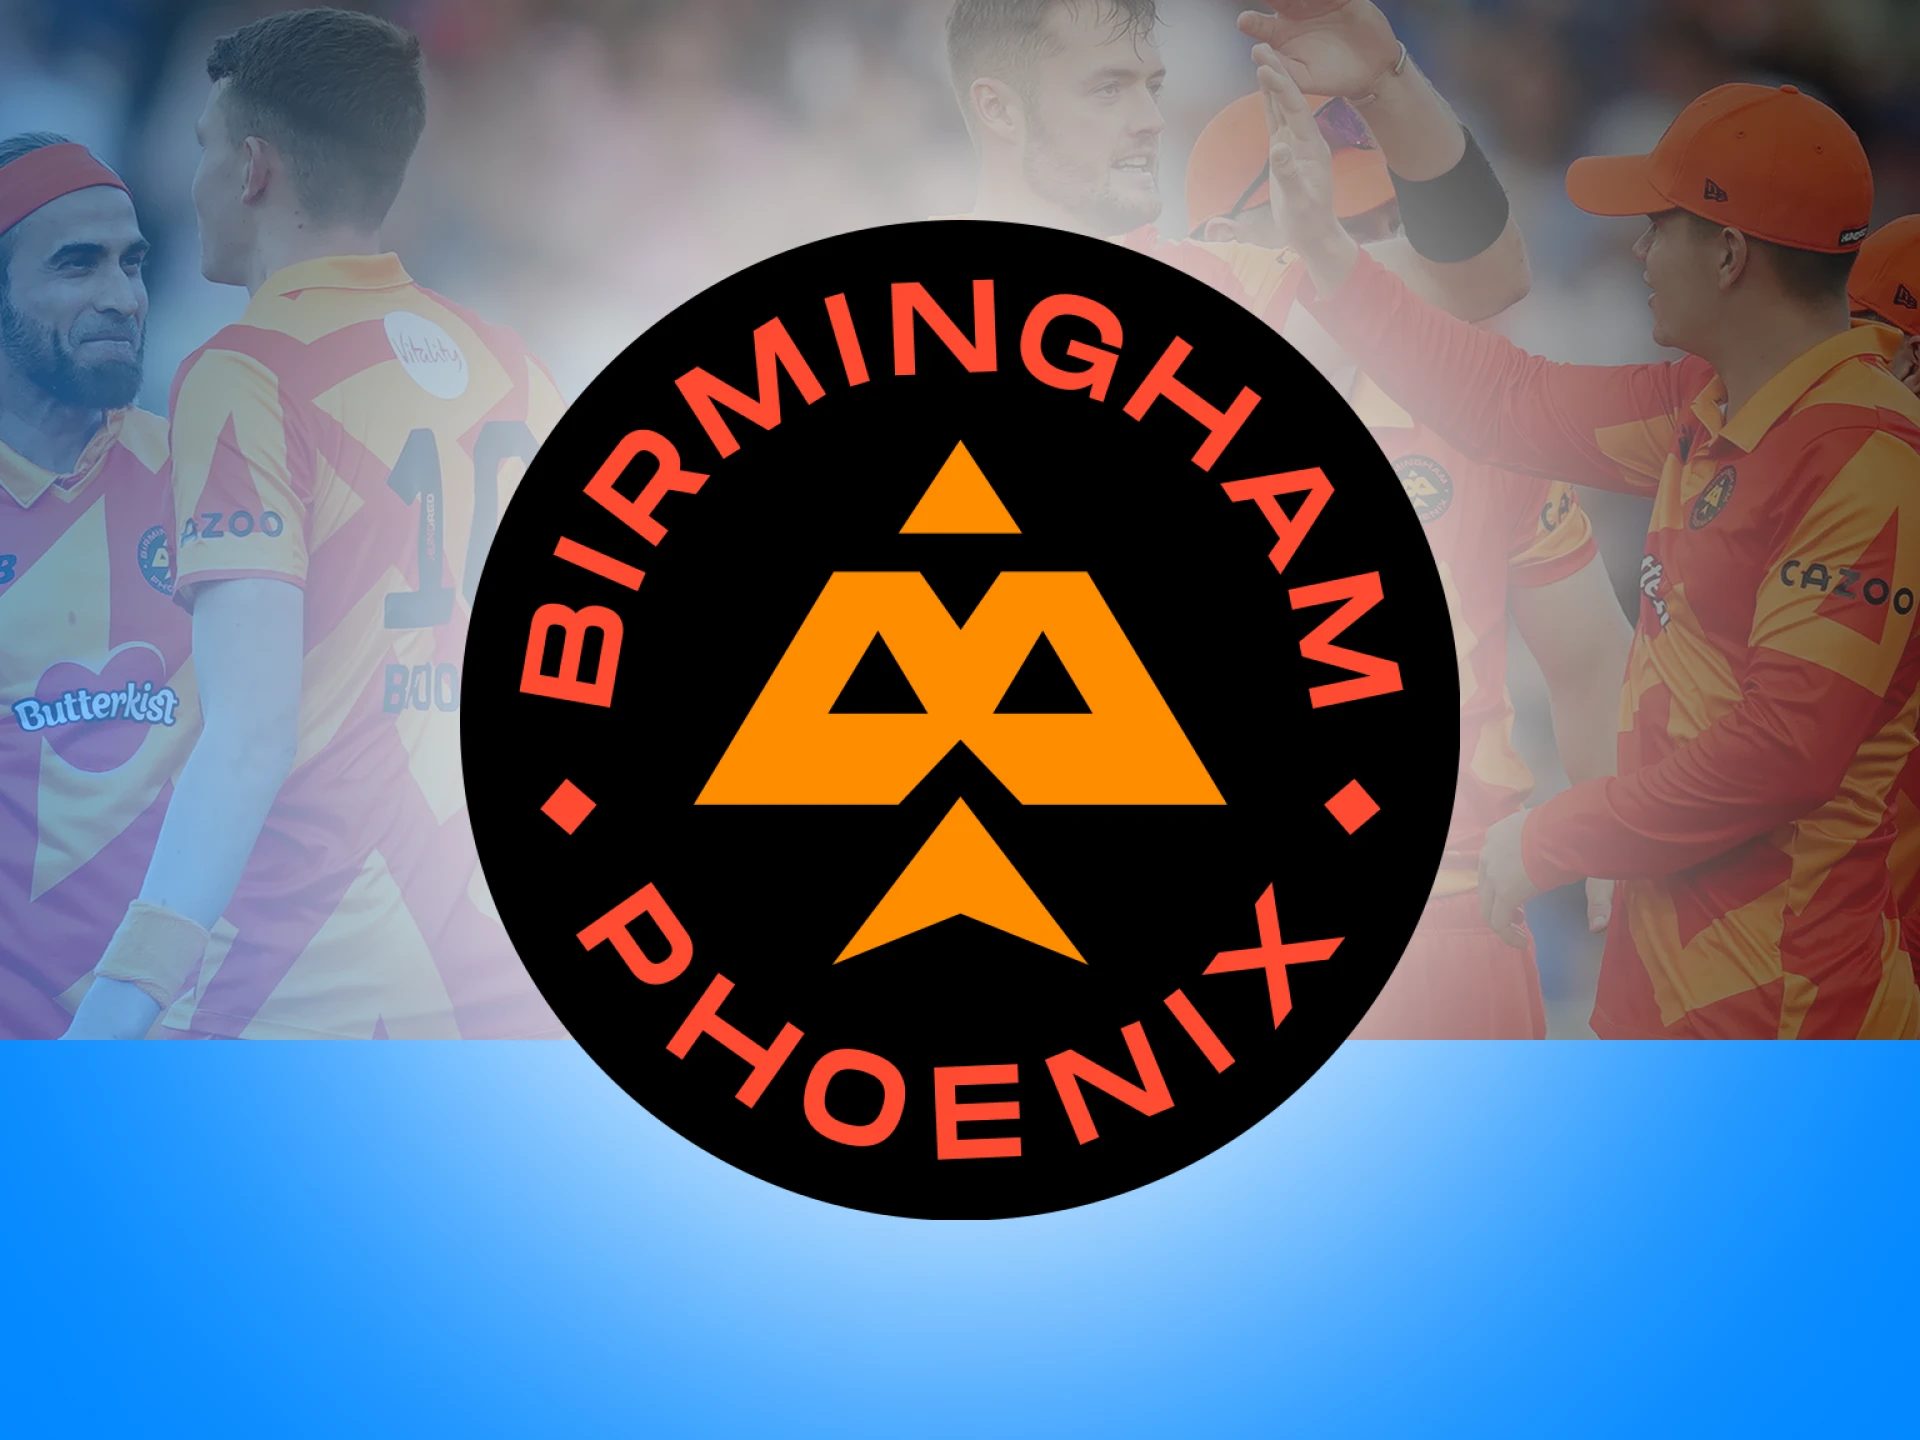 Birmingham Phoenix is a great team to bet on.